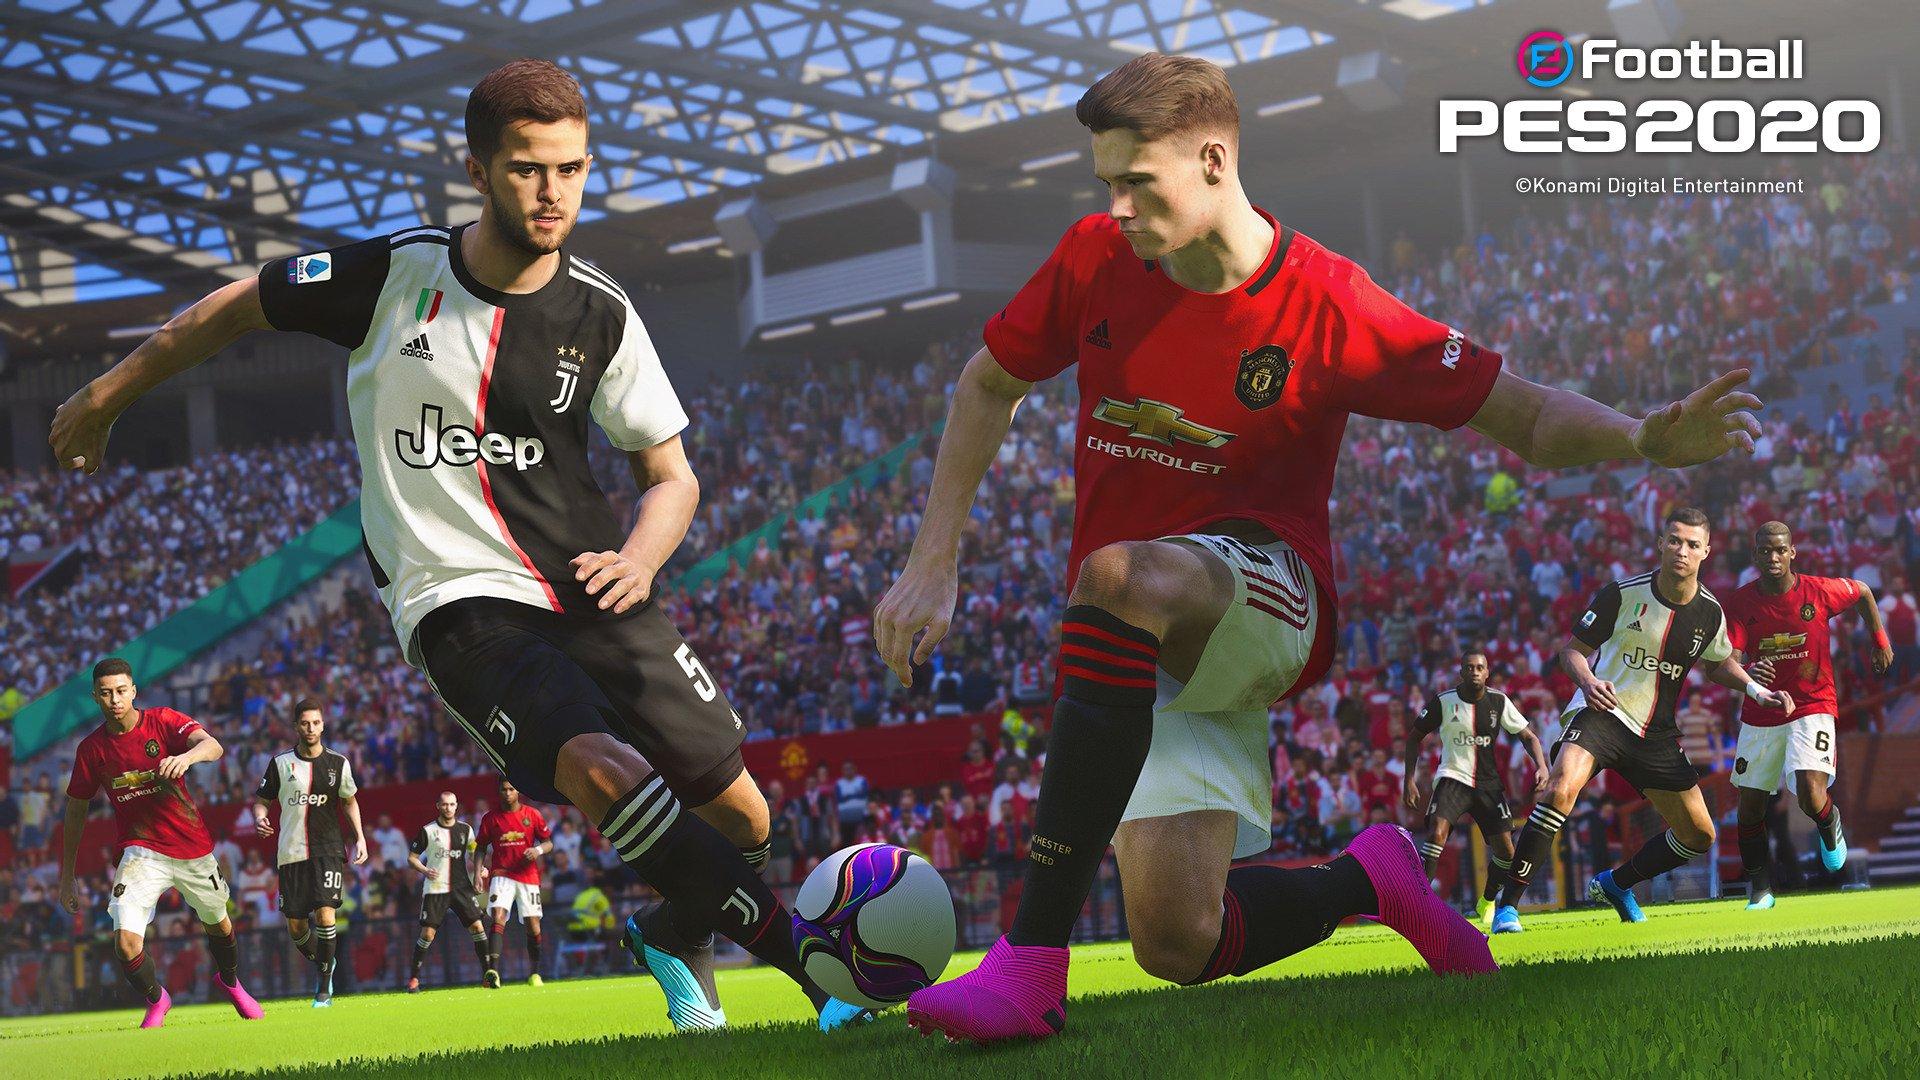 eFootball Pro Evolution Soccer 2020 HD Wallpaper. Background